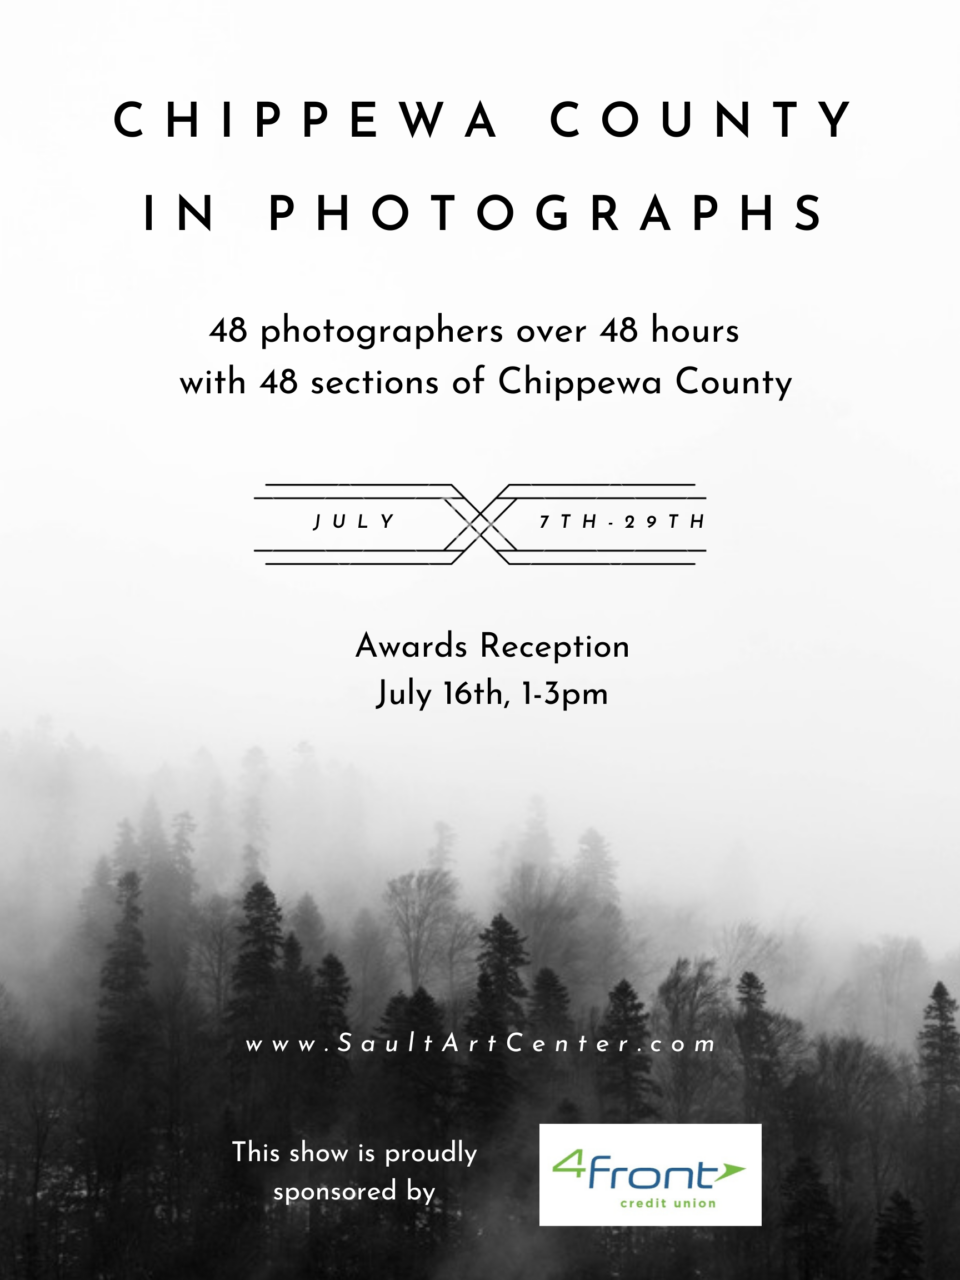 photograph awards reception flyer